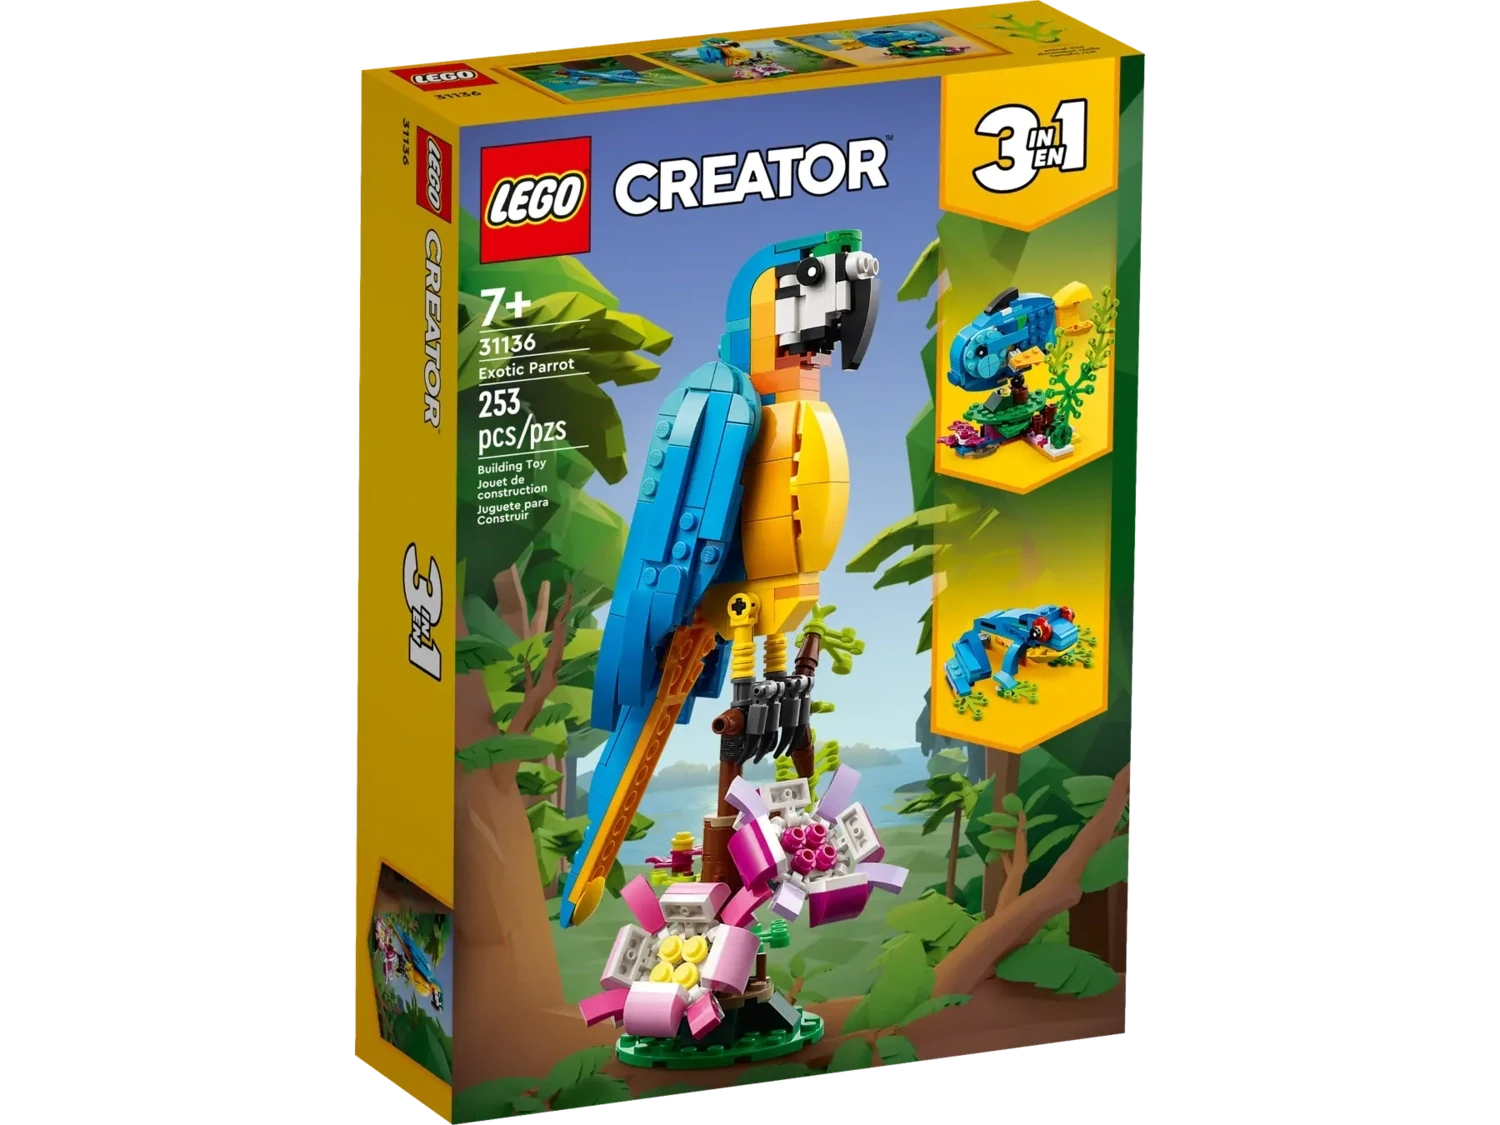 Exotic Parrot Lego